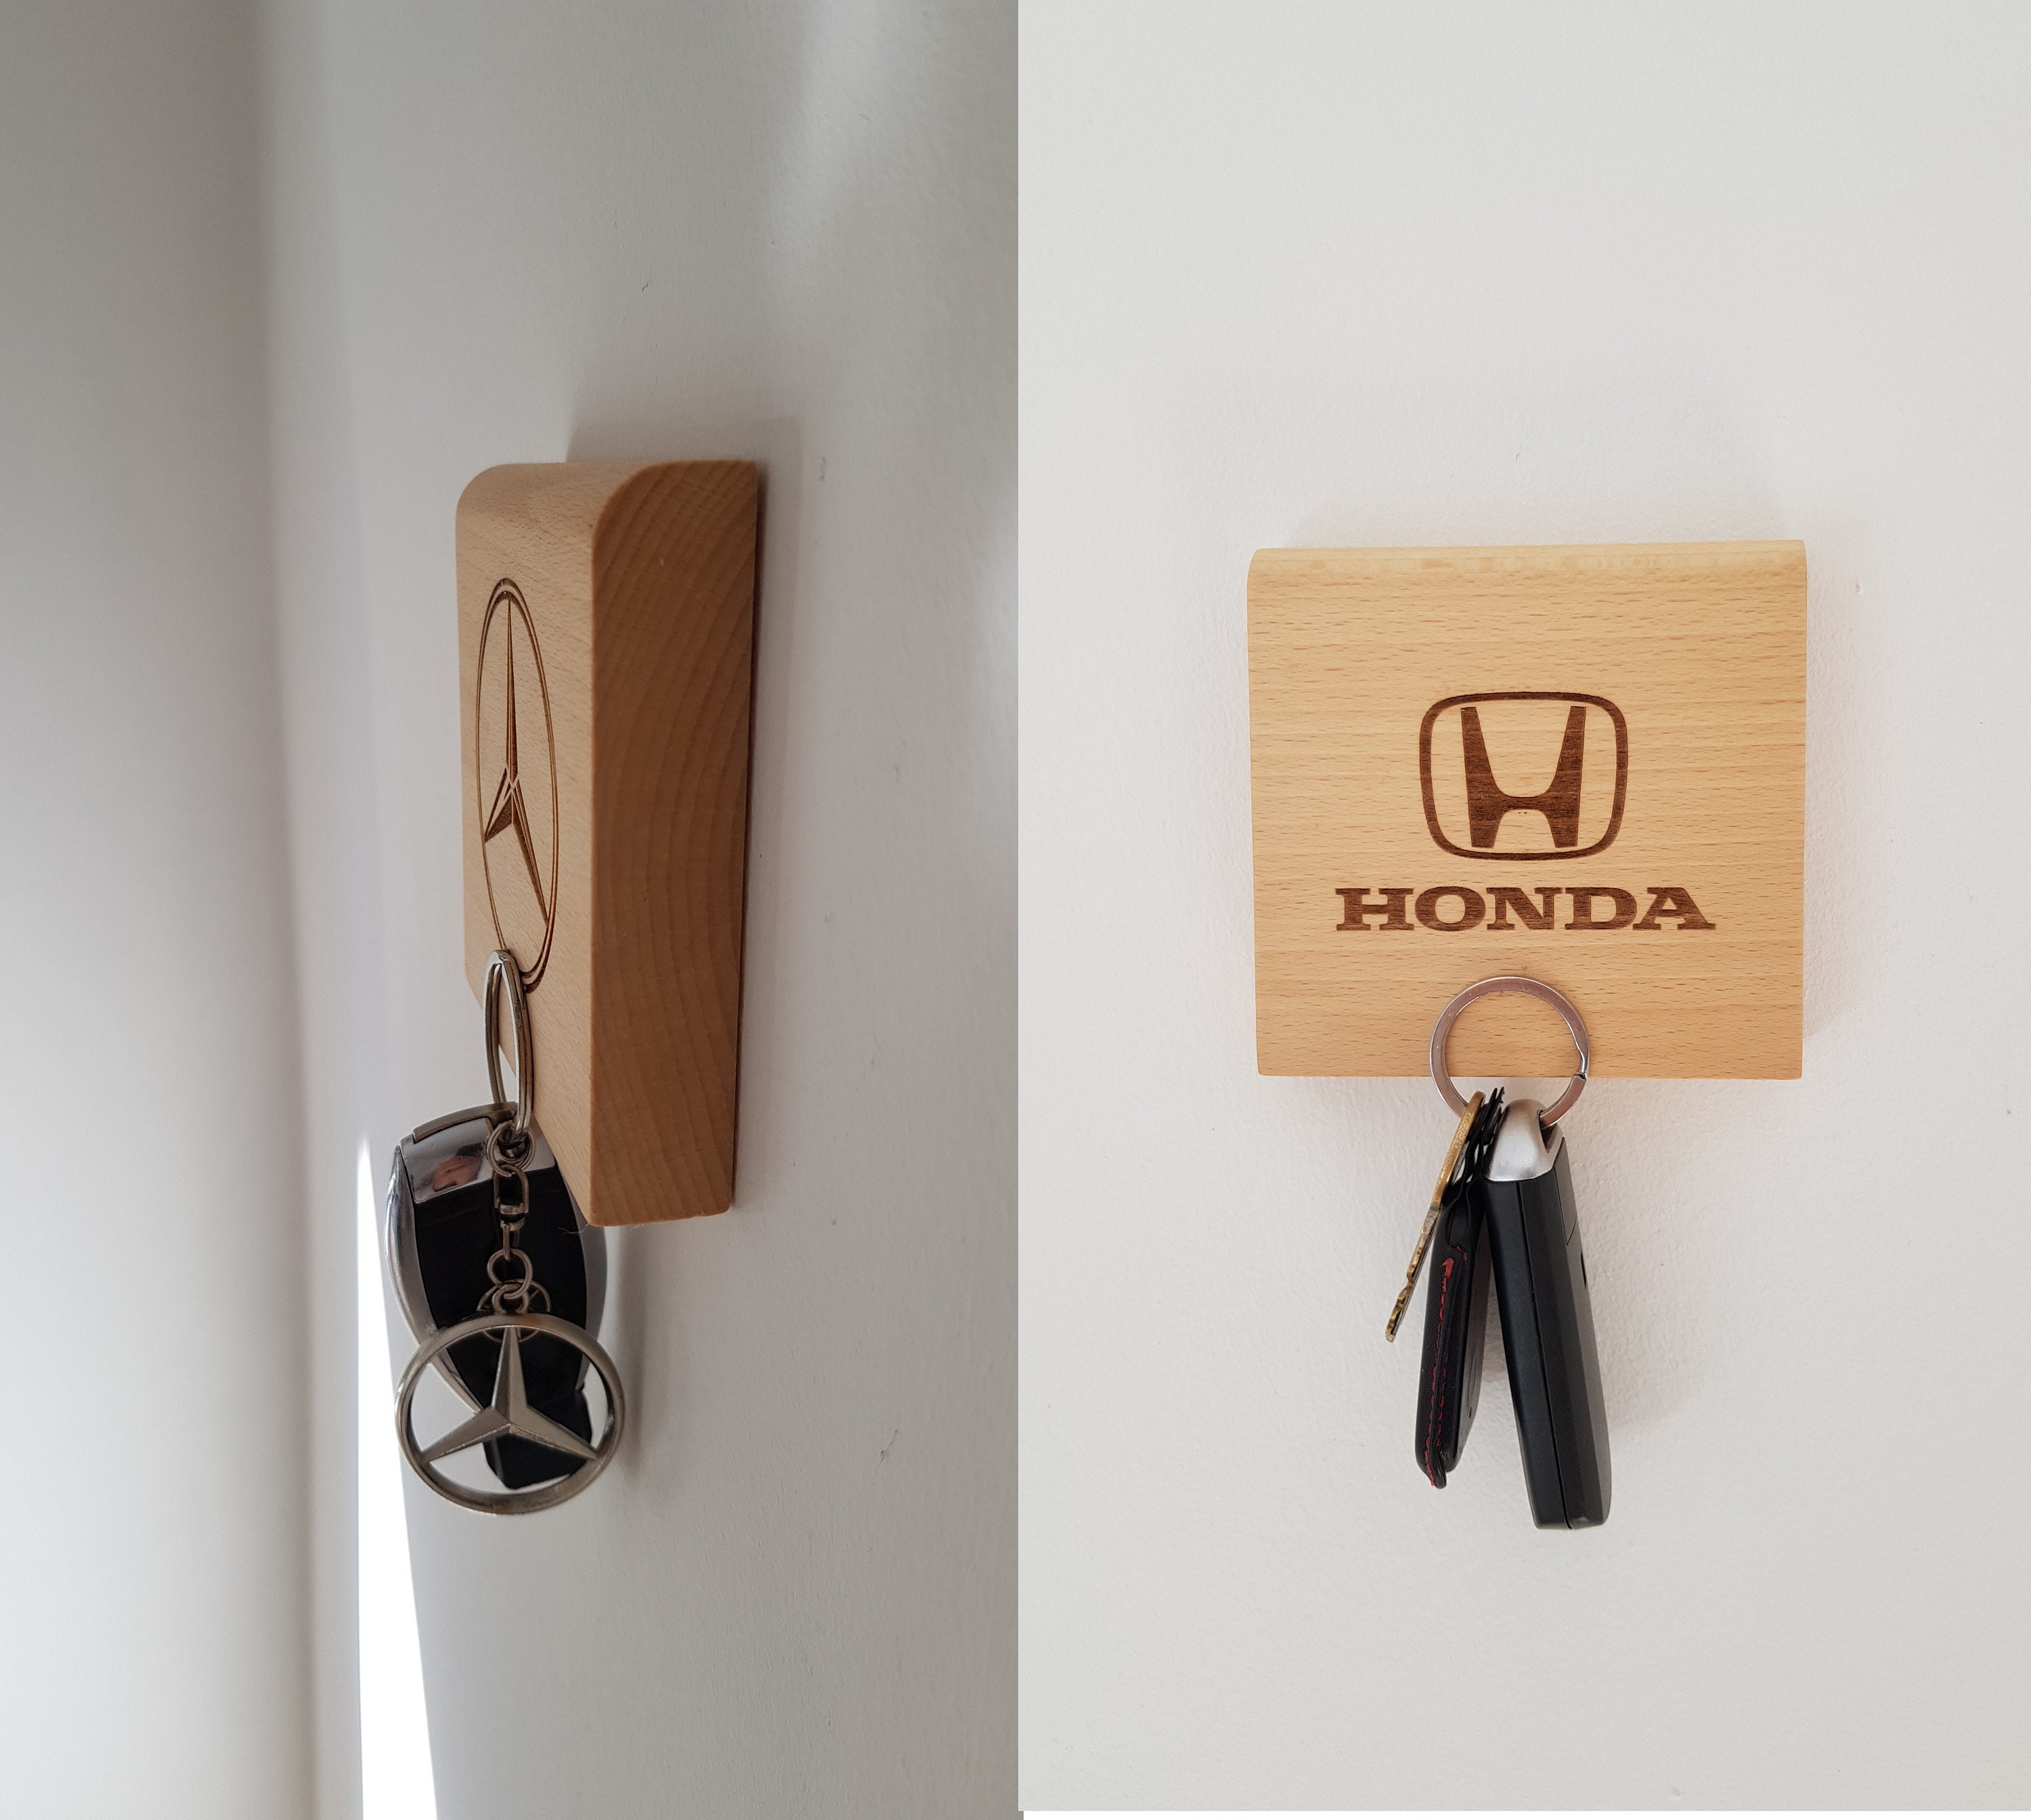 Honda Key Holder for Wall With Car Logo, Best for Car Lover Gift